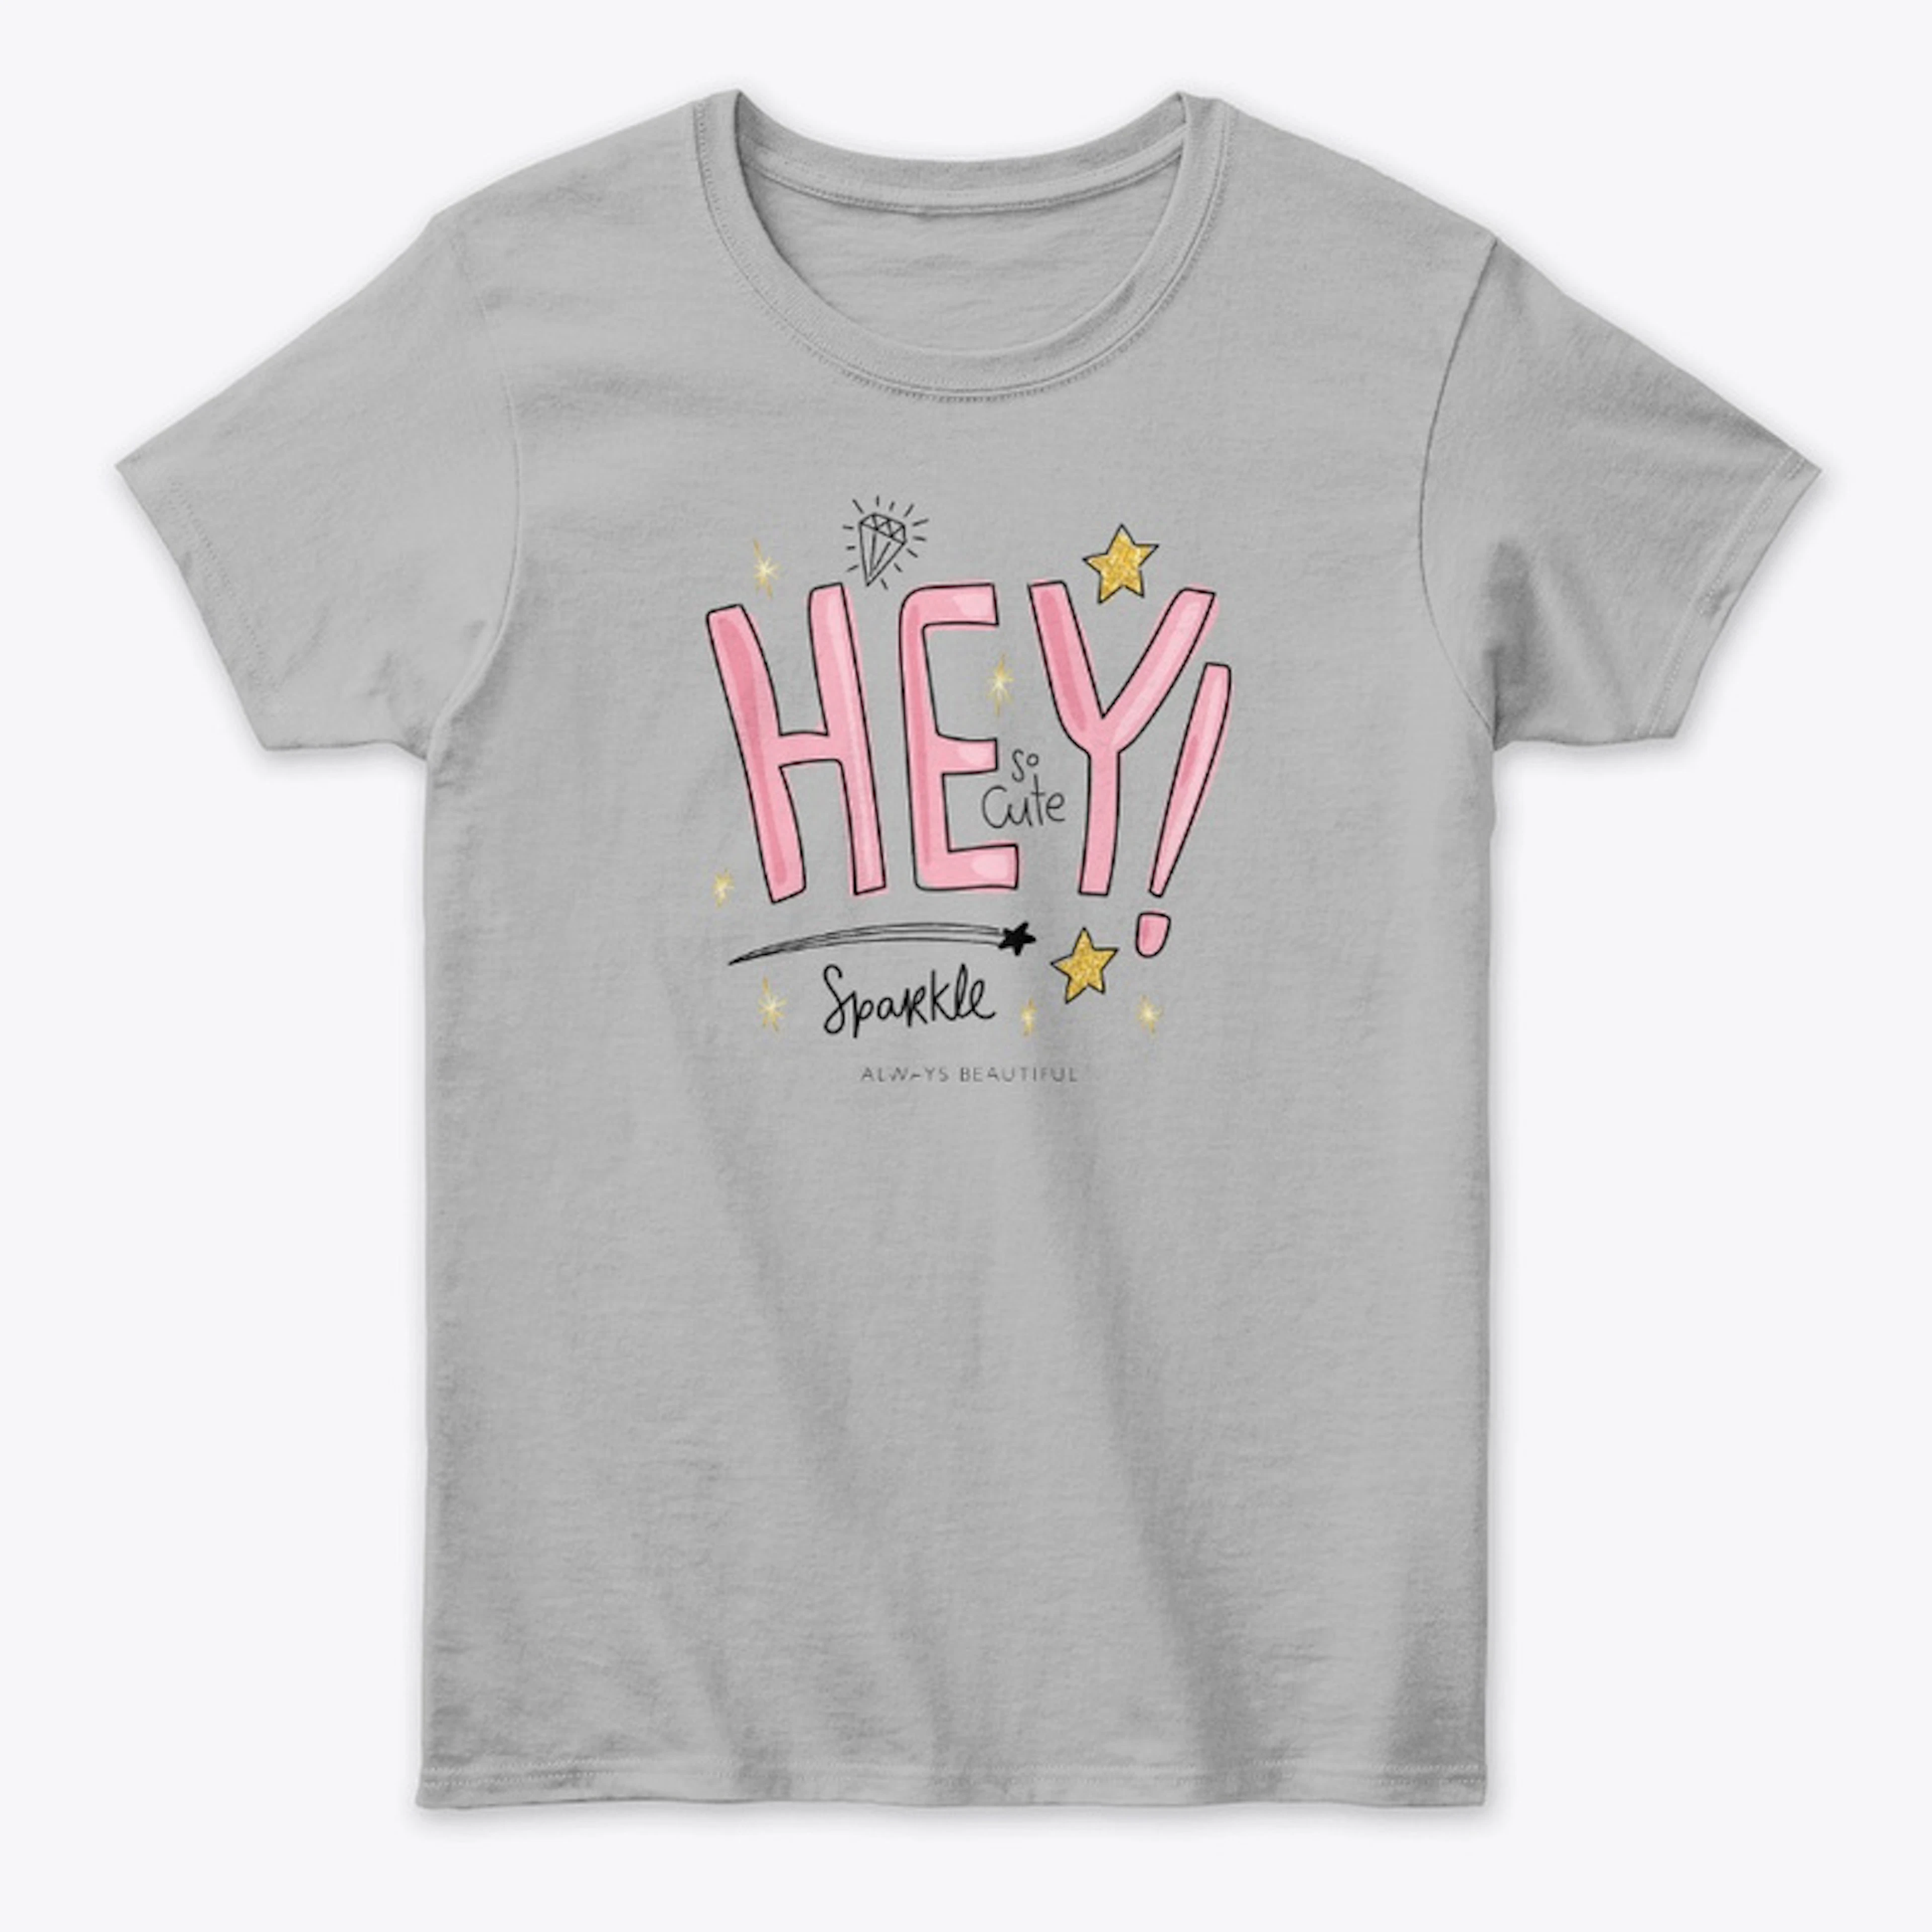 Women Words T Shirt - Hey!